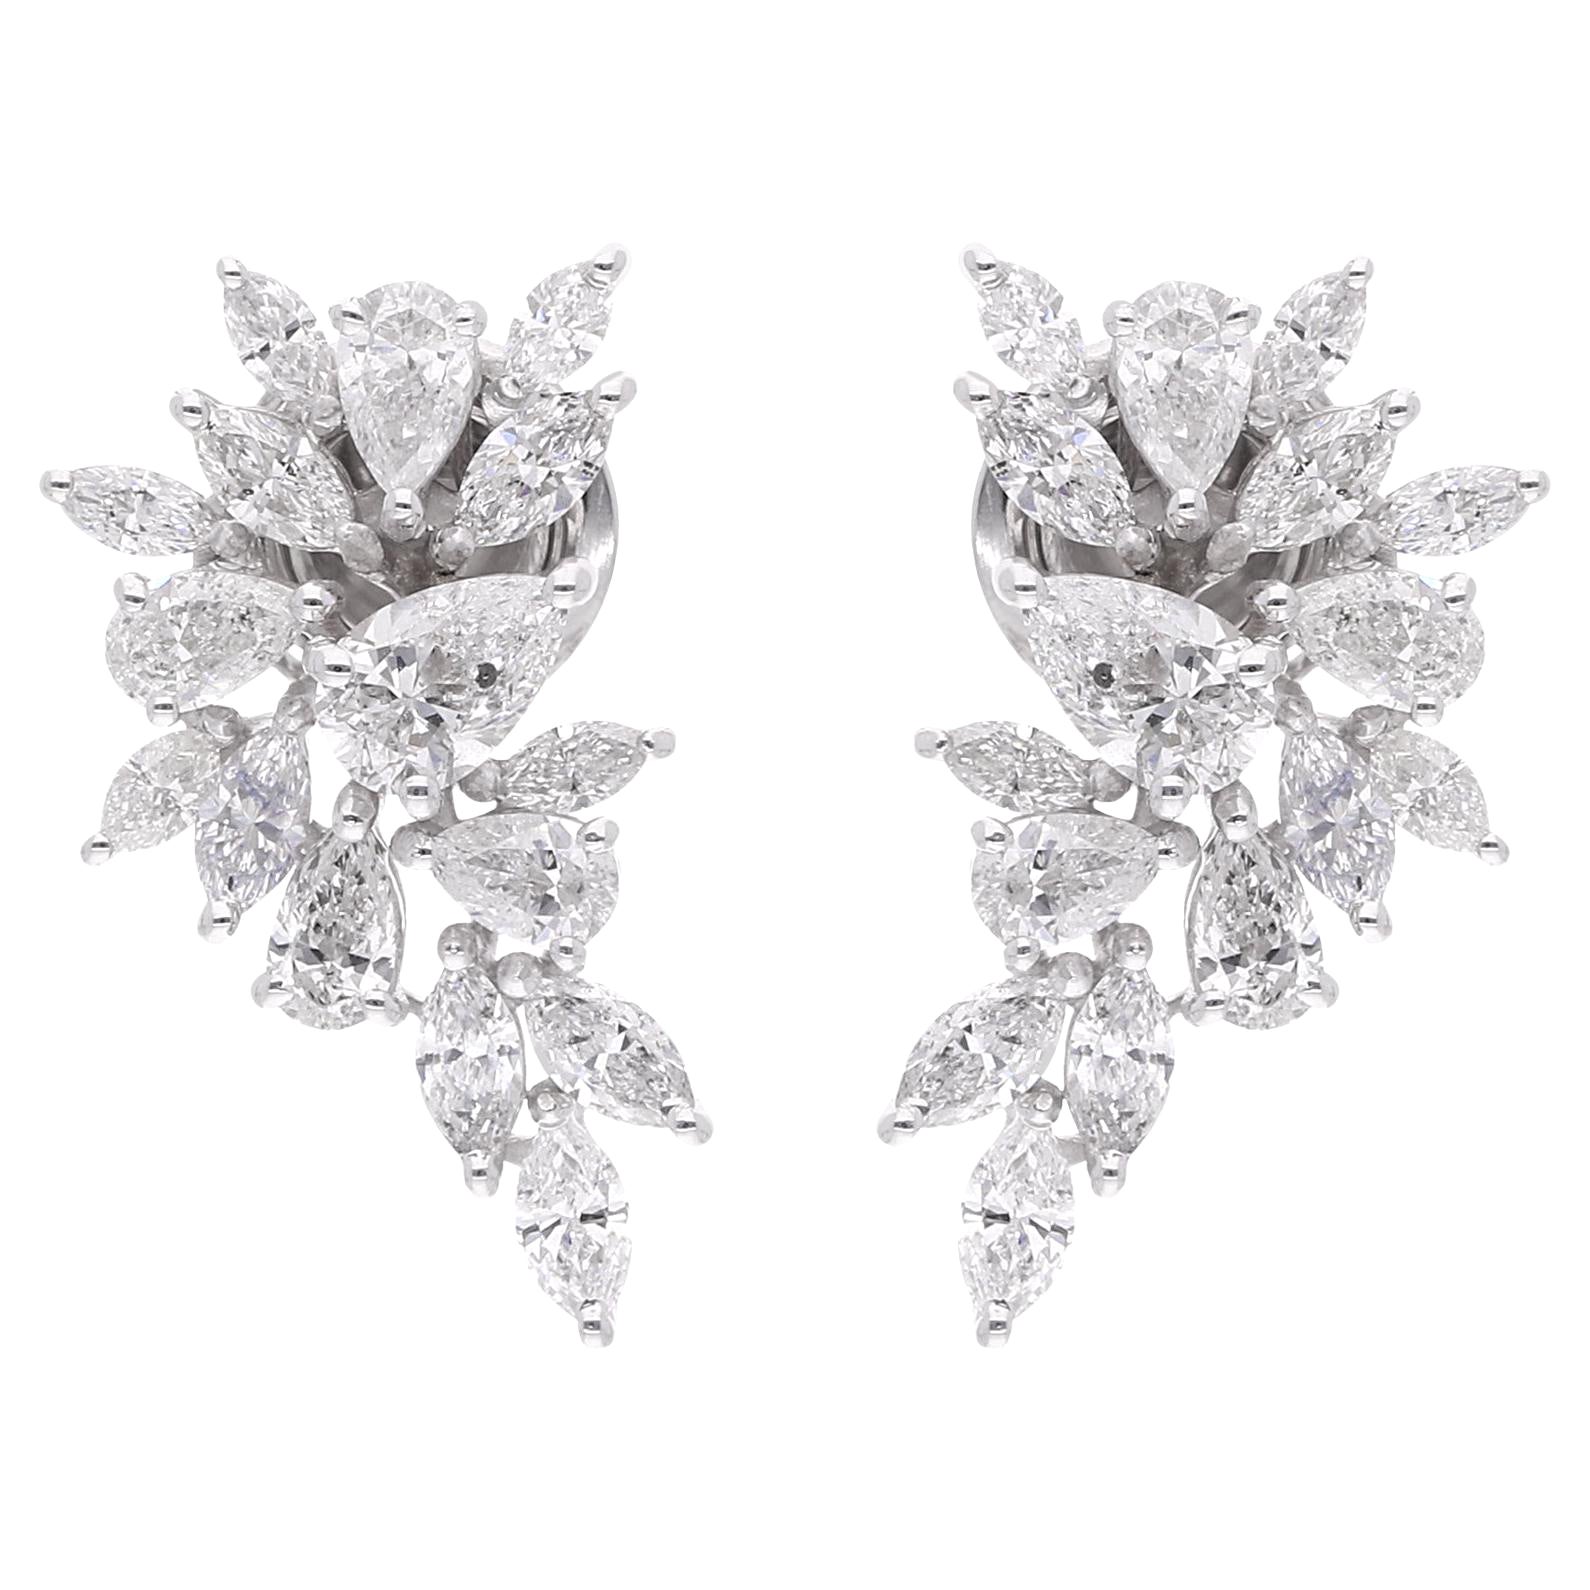 2.13 Carat Marquise & Pear Diamond Earrings 18 Karat White Gold Handmade Jewelry